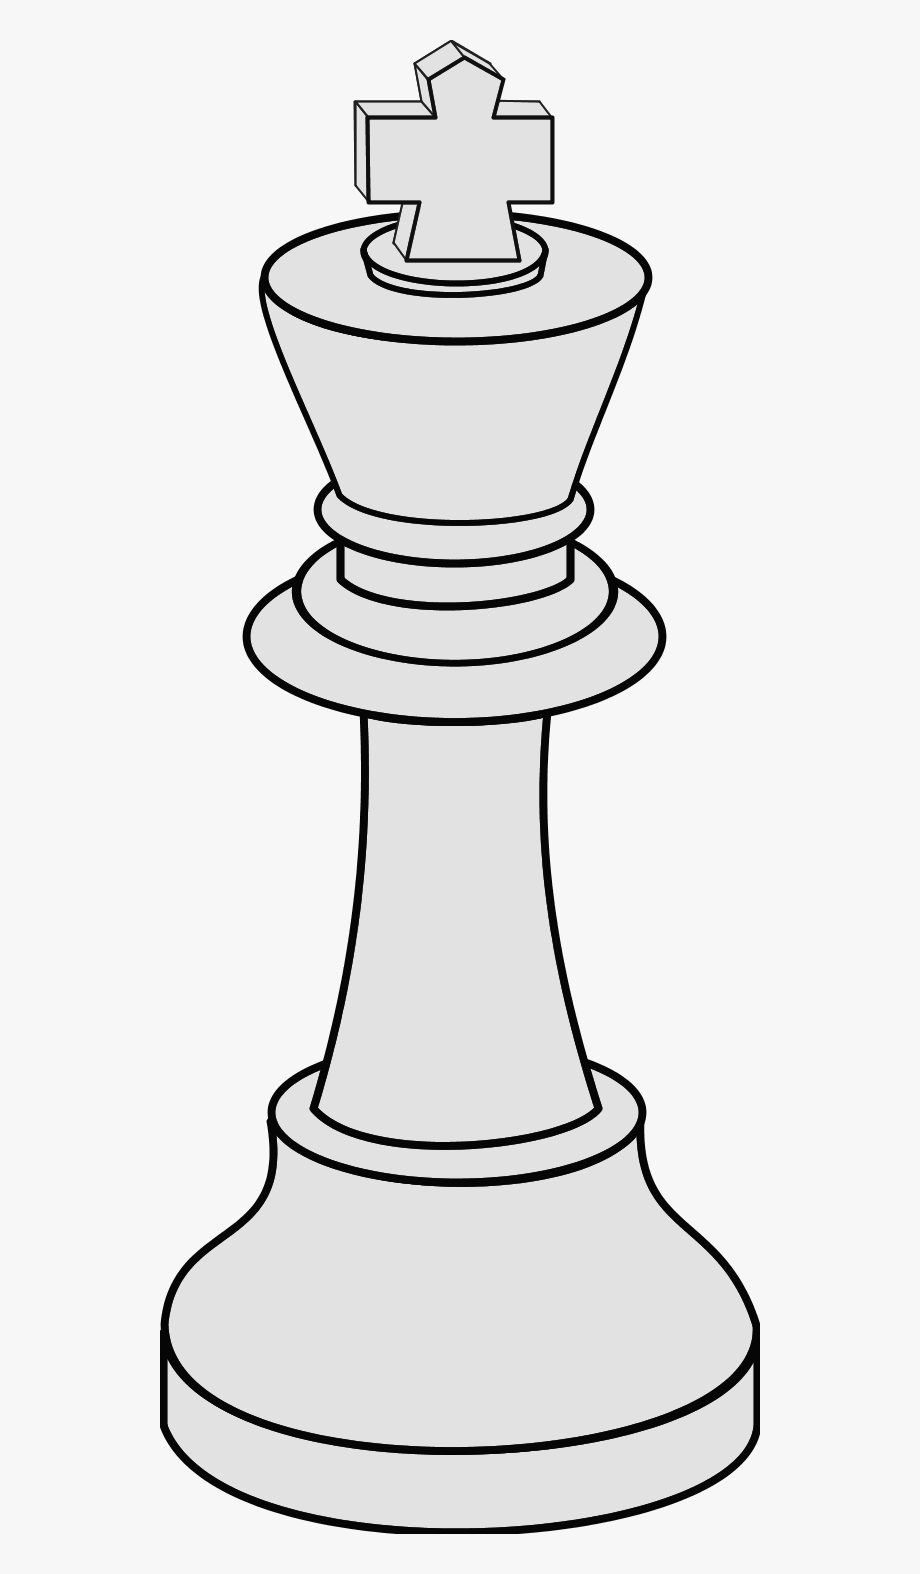 Cartoon King Chess Pieces Clip Art Library